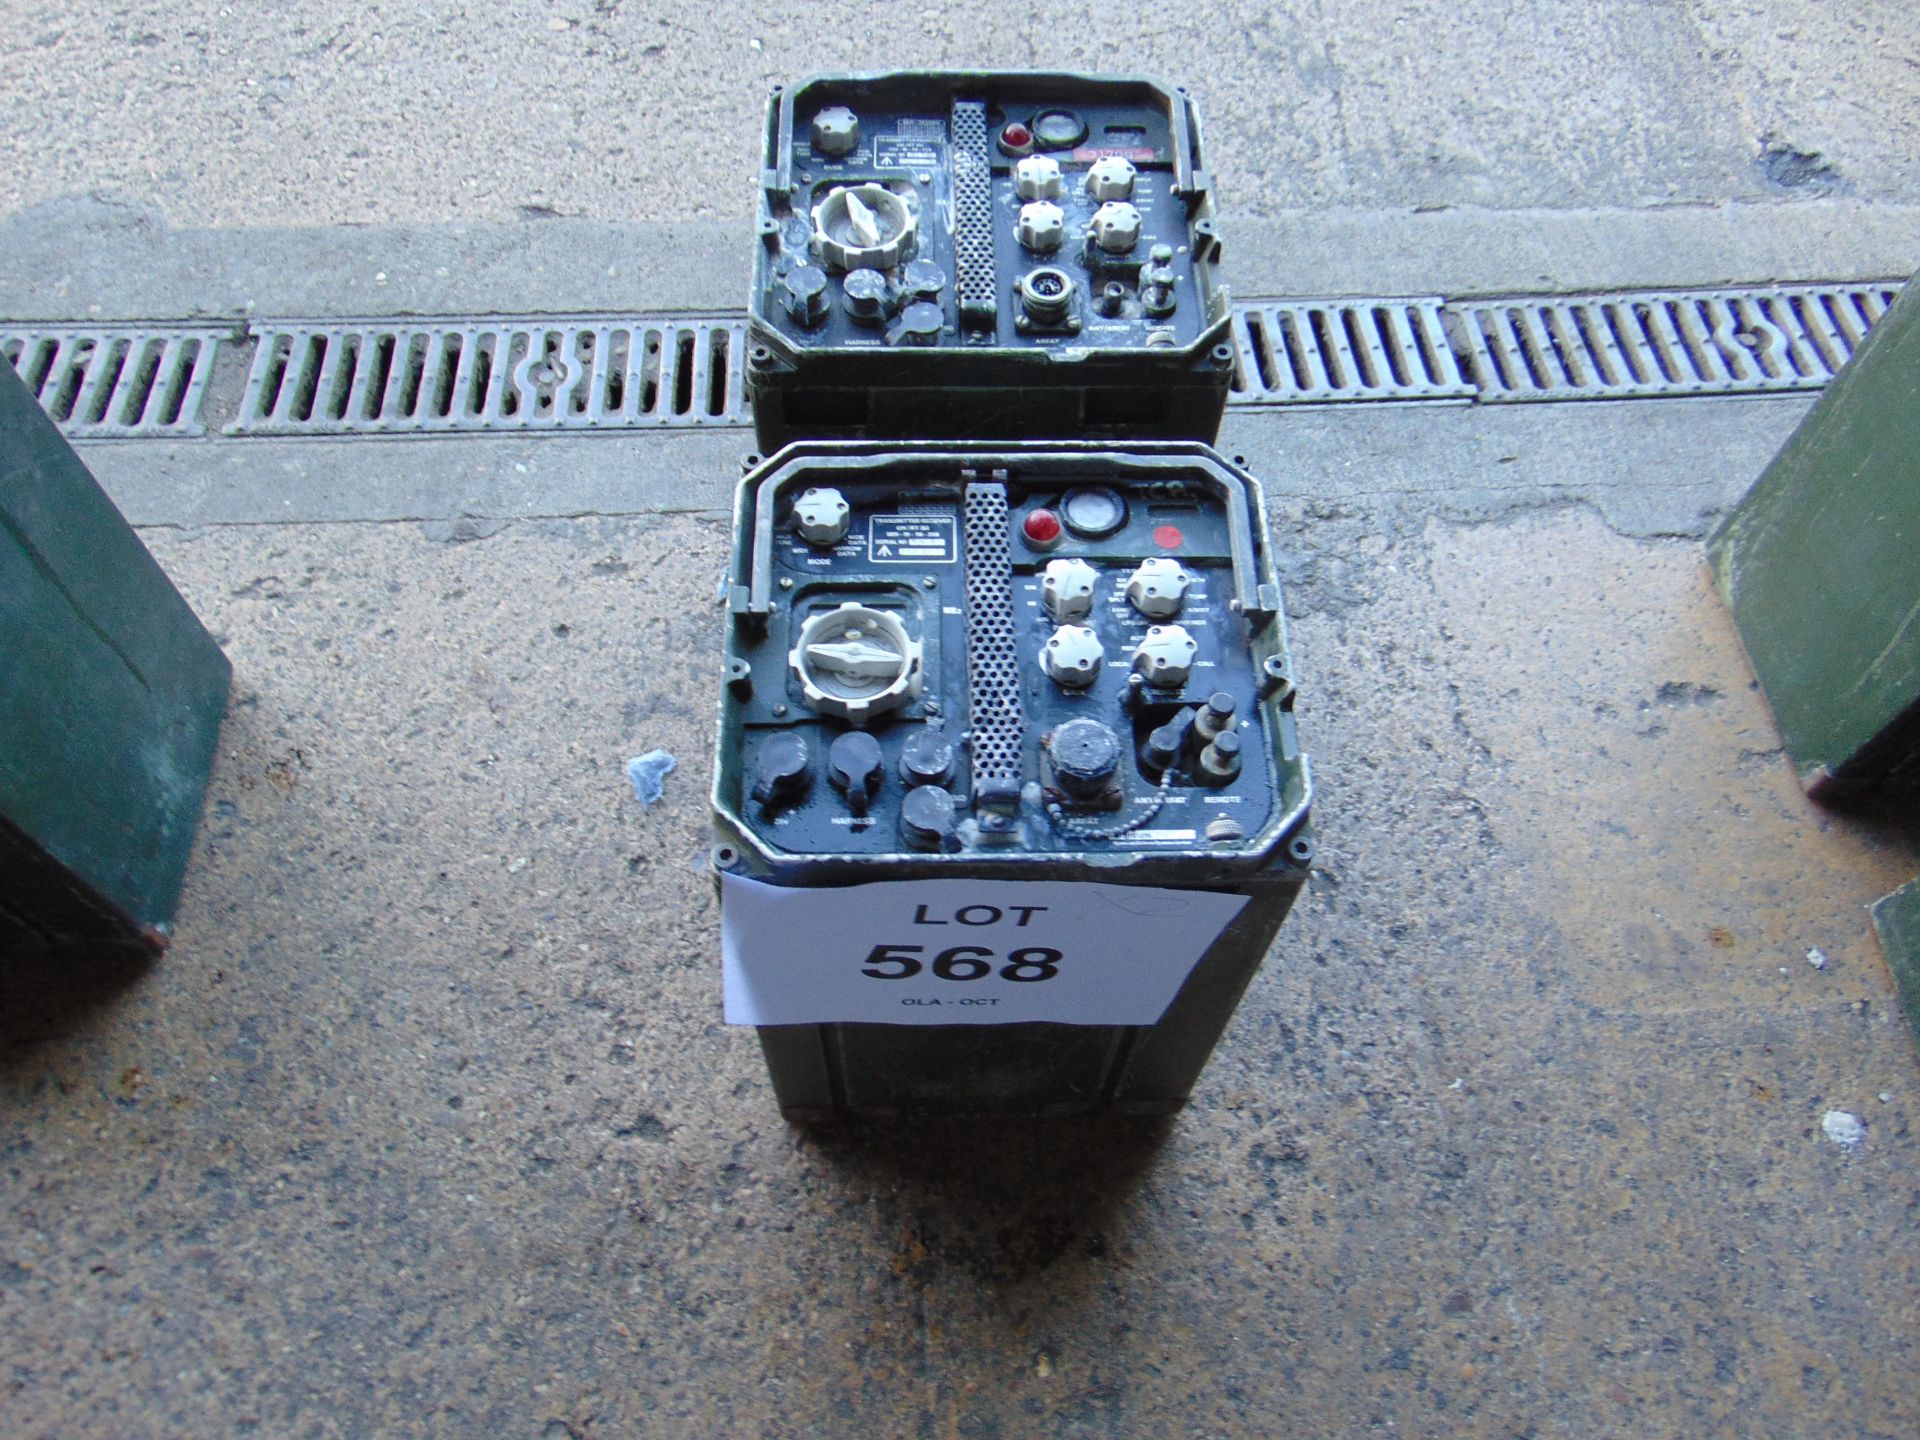 2 x Clansman UK RT 353 Transmitter Reciever VHF for Vehicles ETC - Image 2 of 2